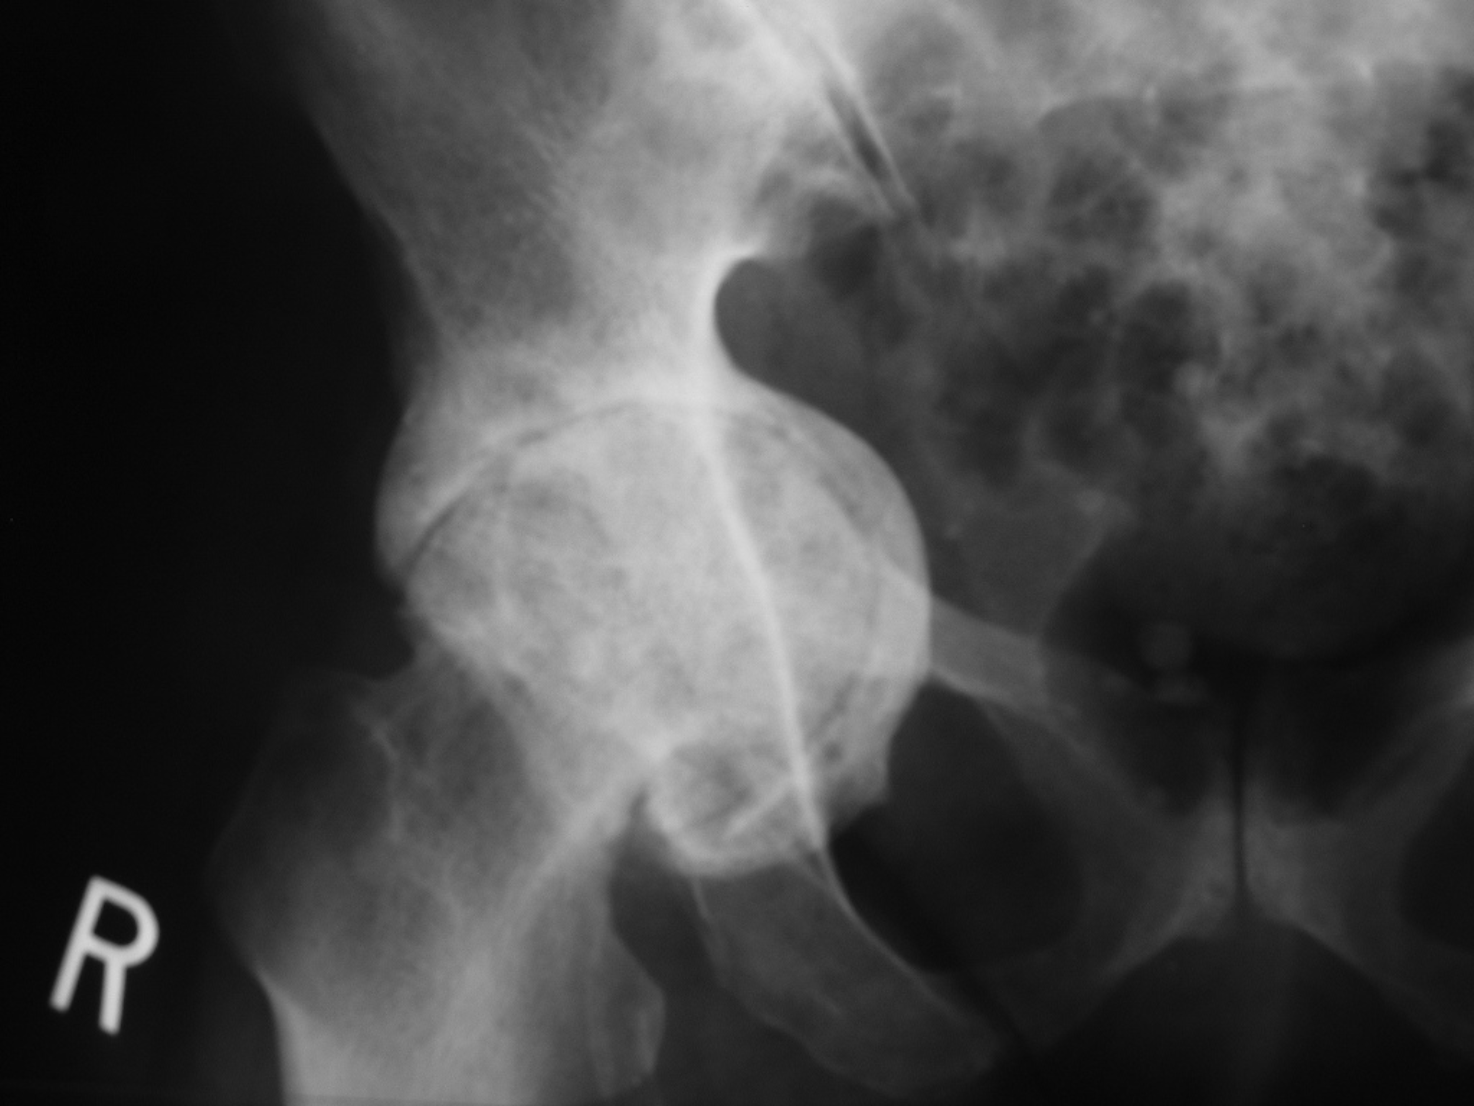 File:Renal osteodystrophy.png